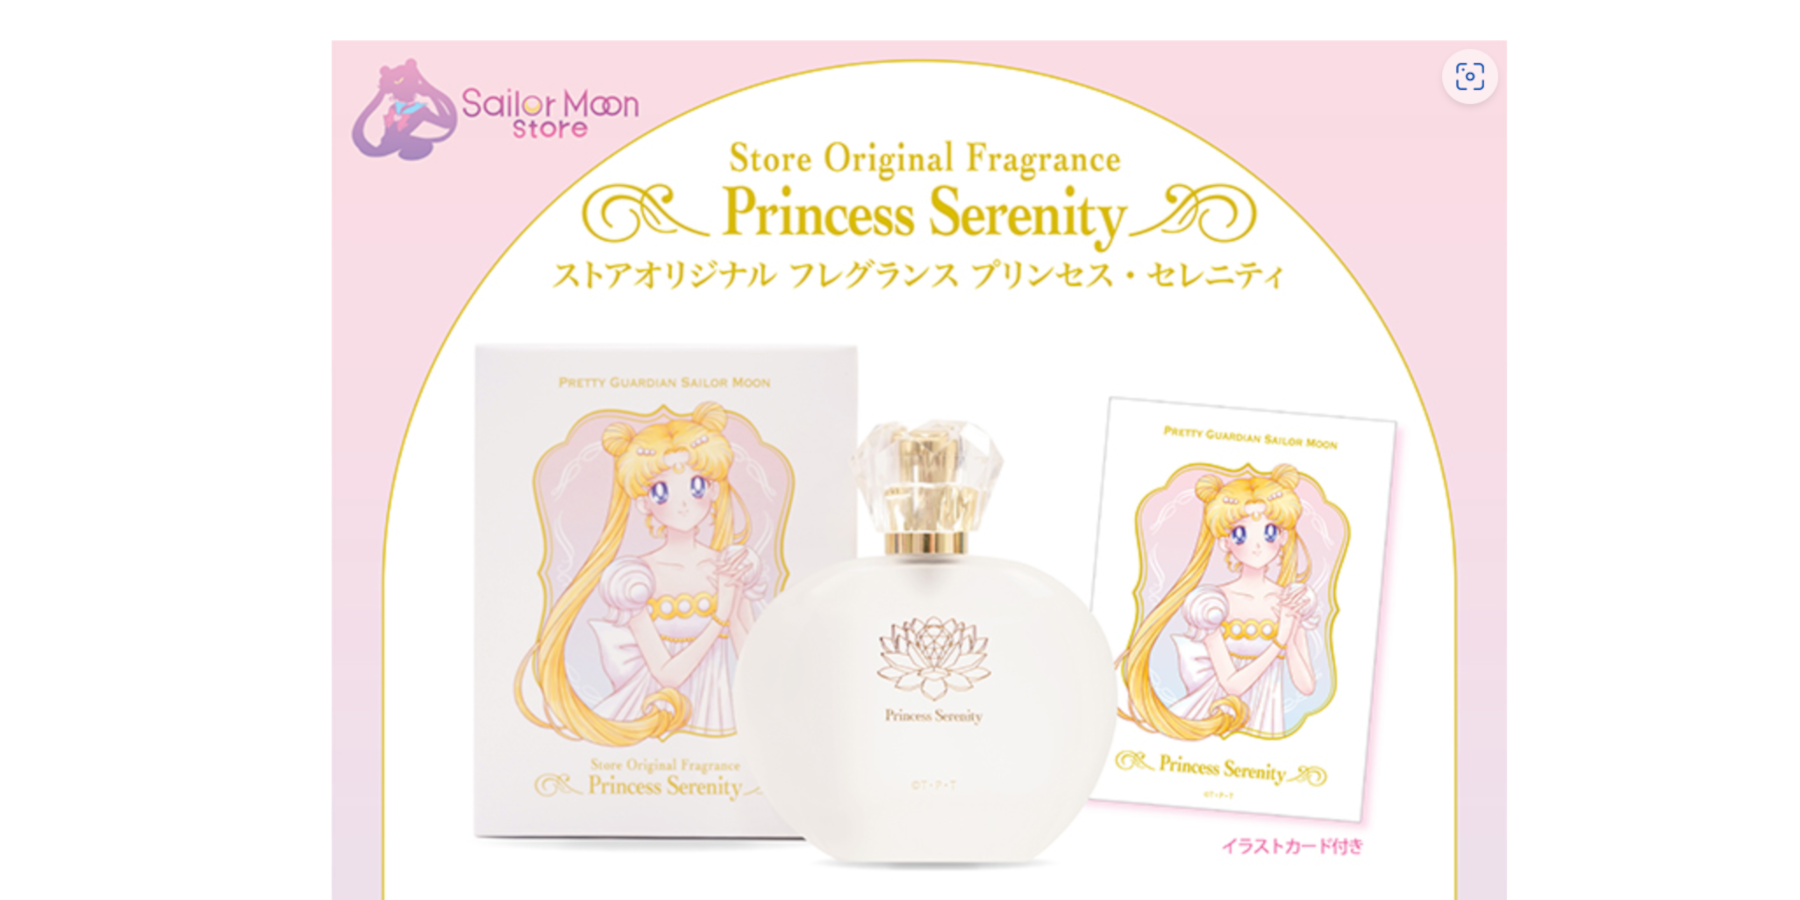 Sailor Moon Perfume